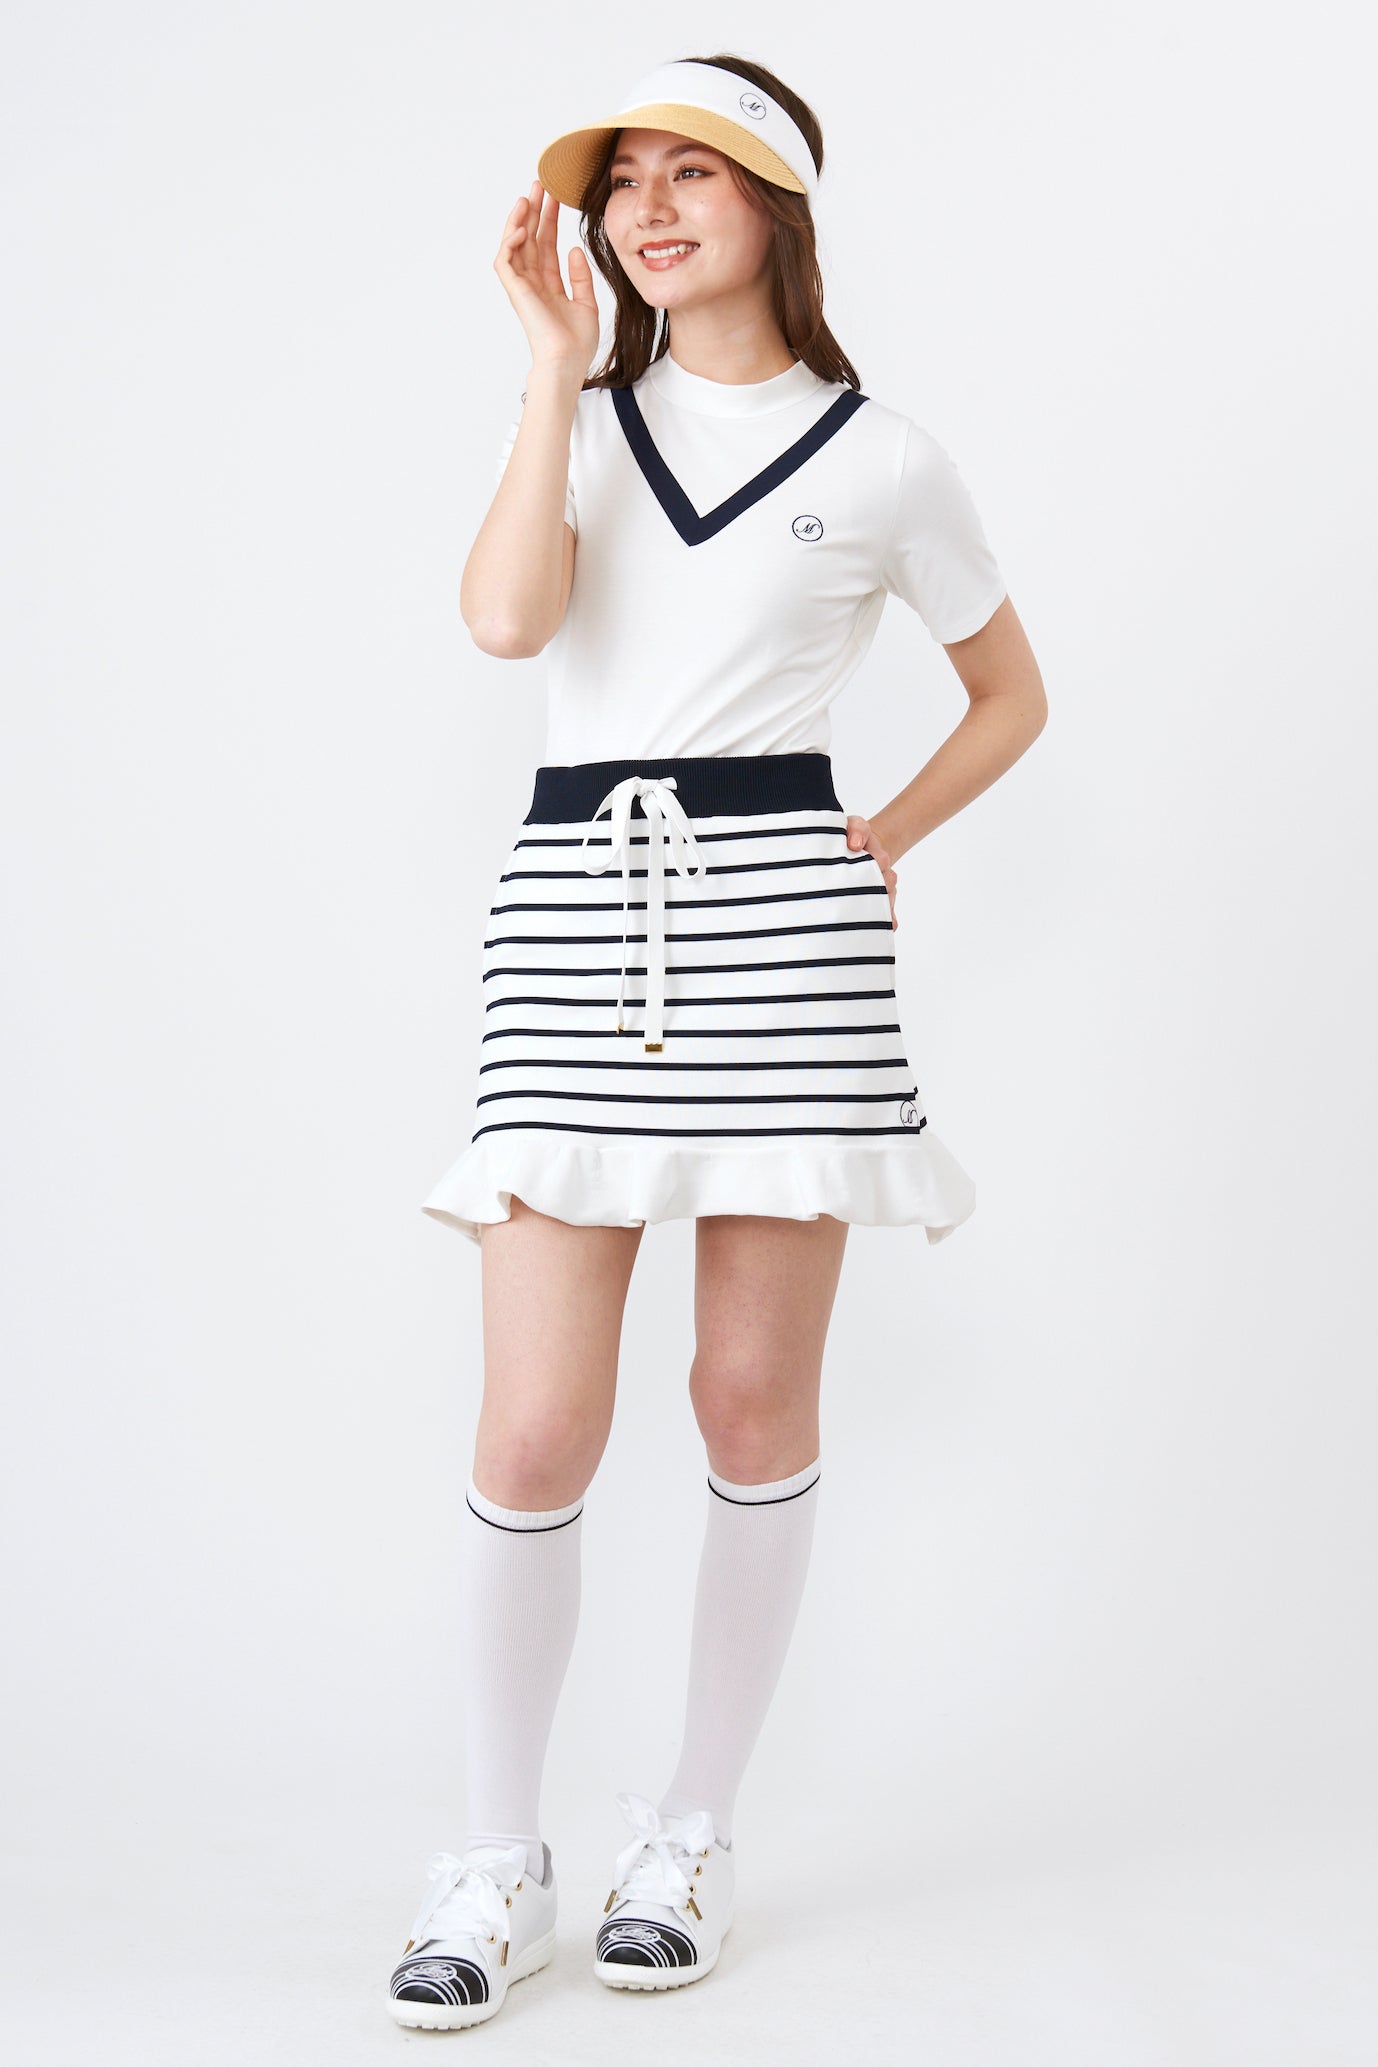 Border pattern knit skirt (701J3520)